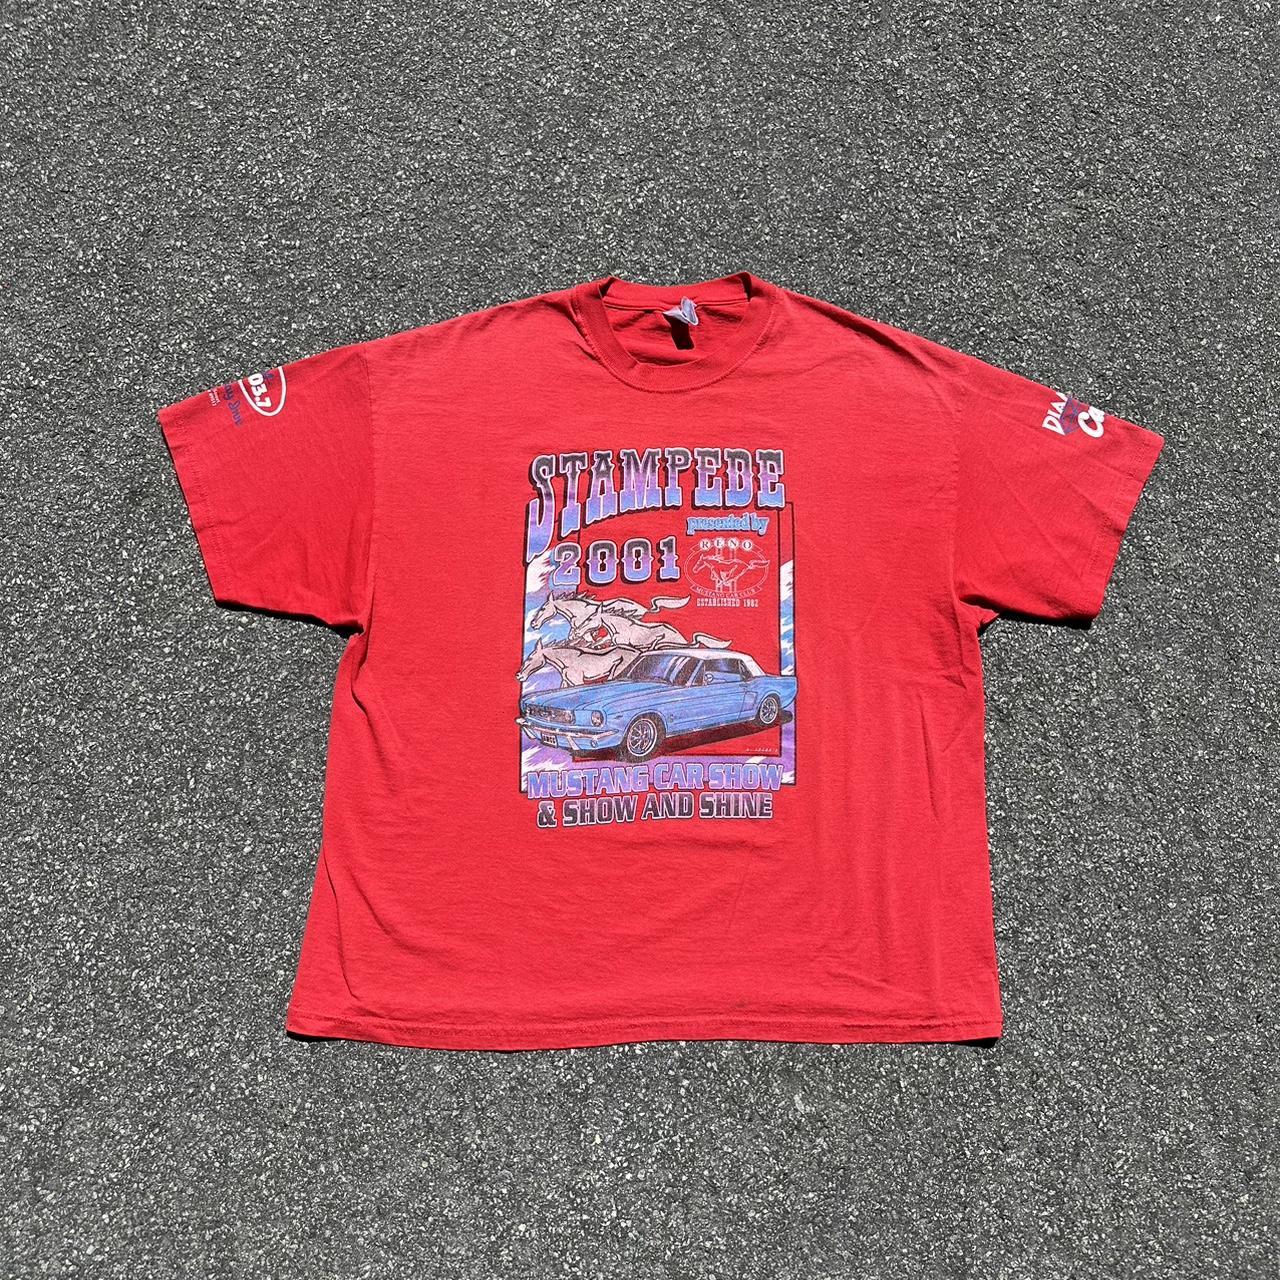 American Vintage Men's T-Shirt - Red - XXL